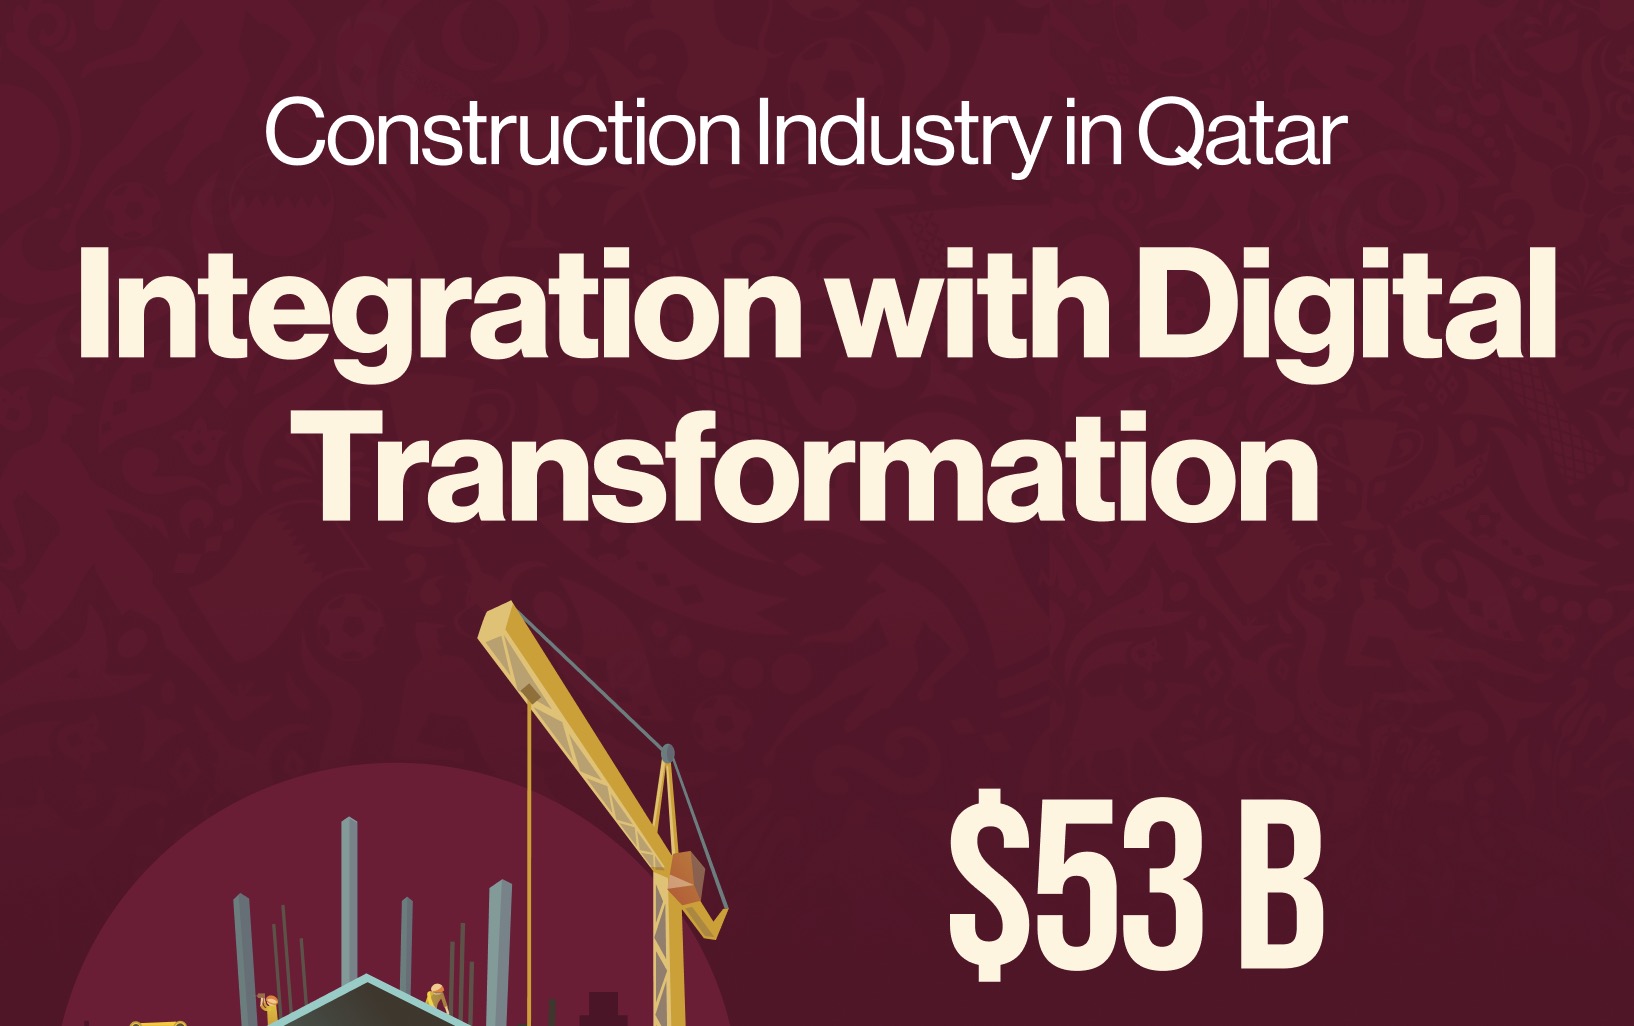 Construction Industry in Qatar - Integration with Digital Transformation